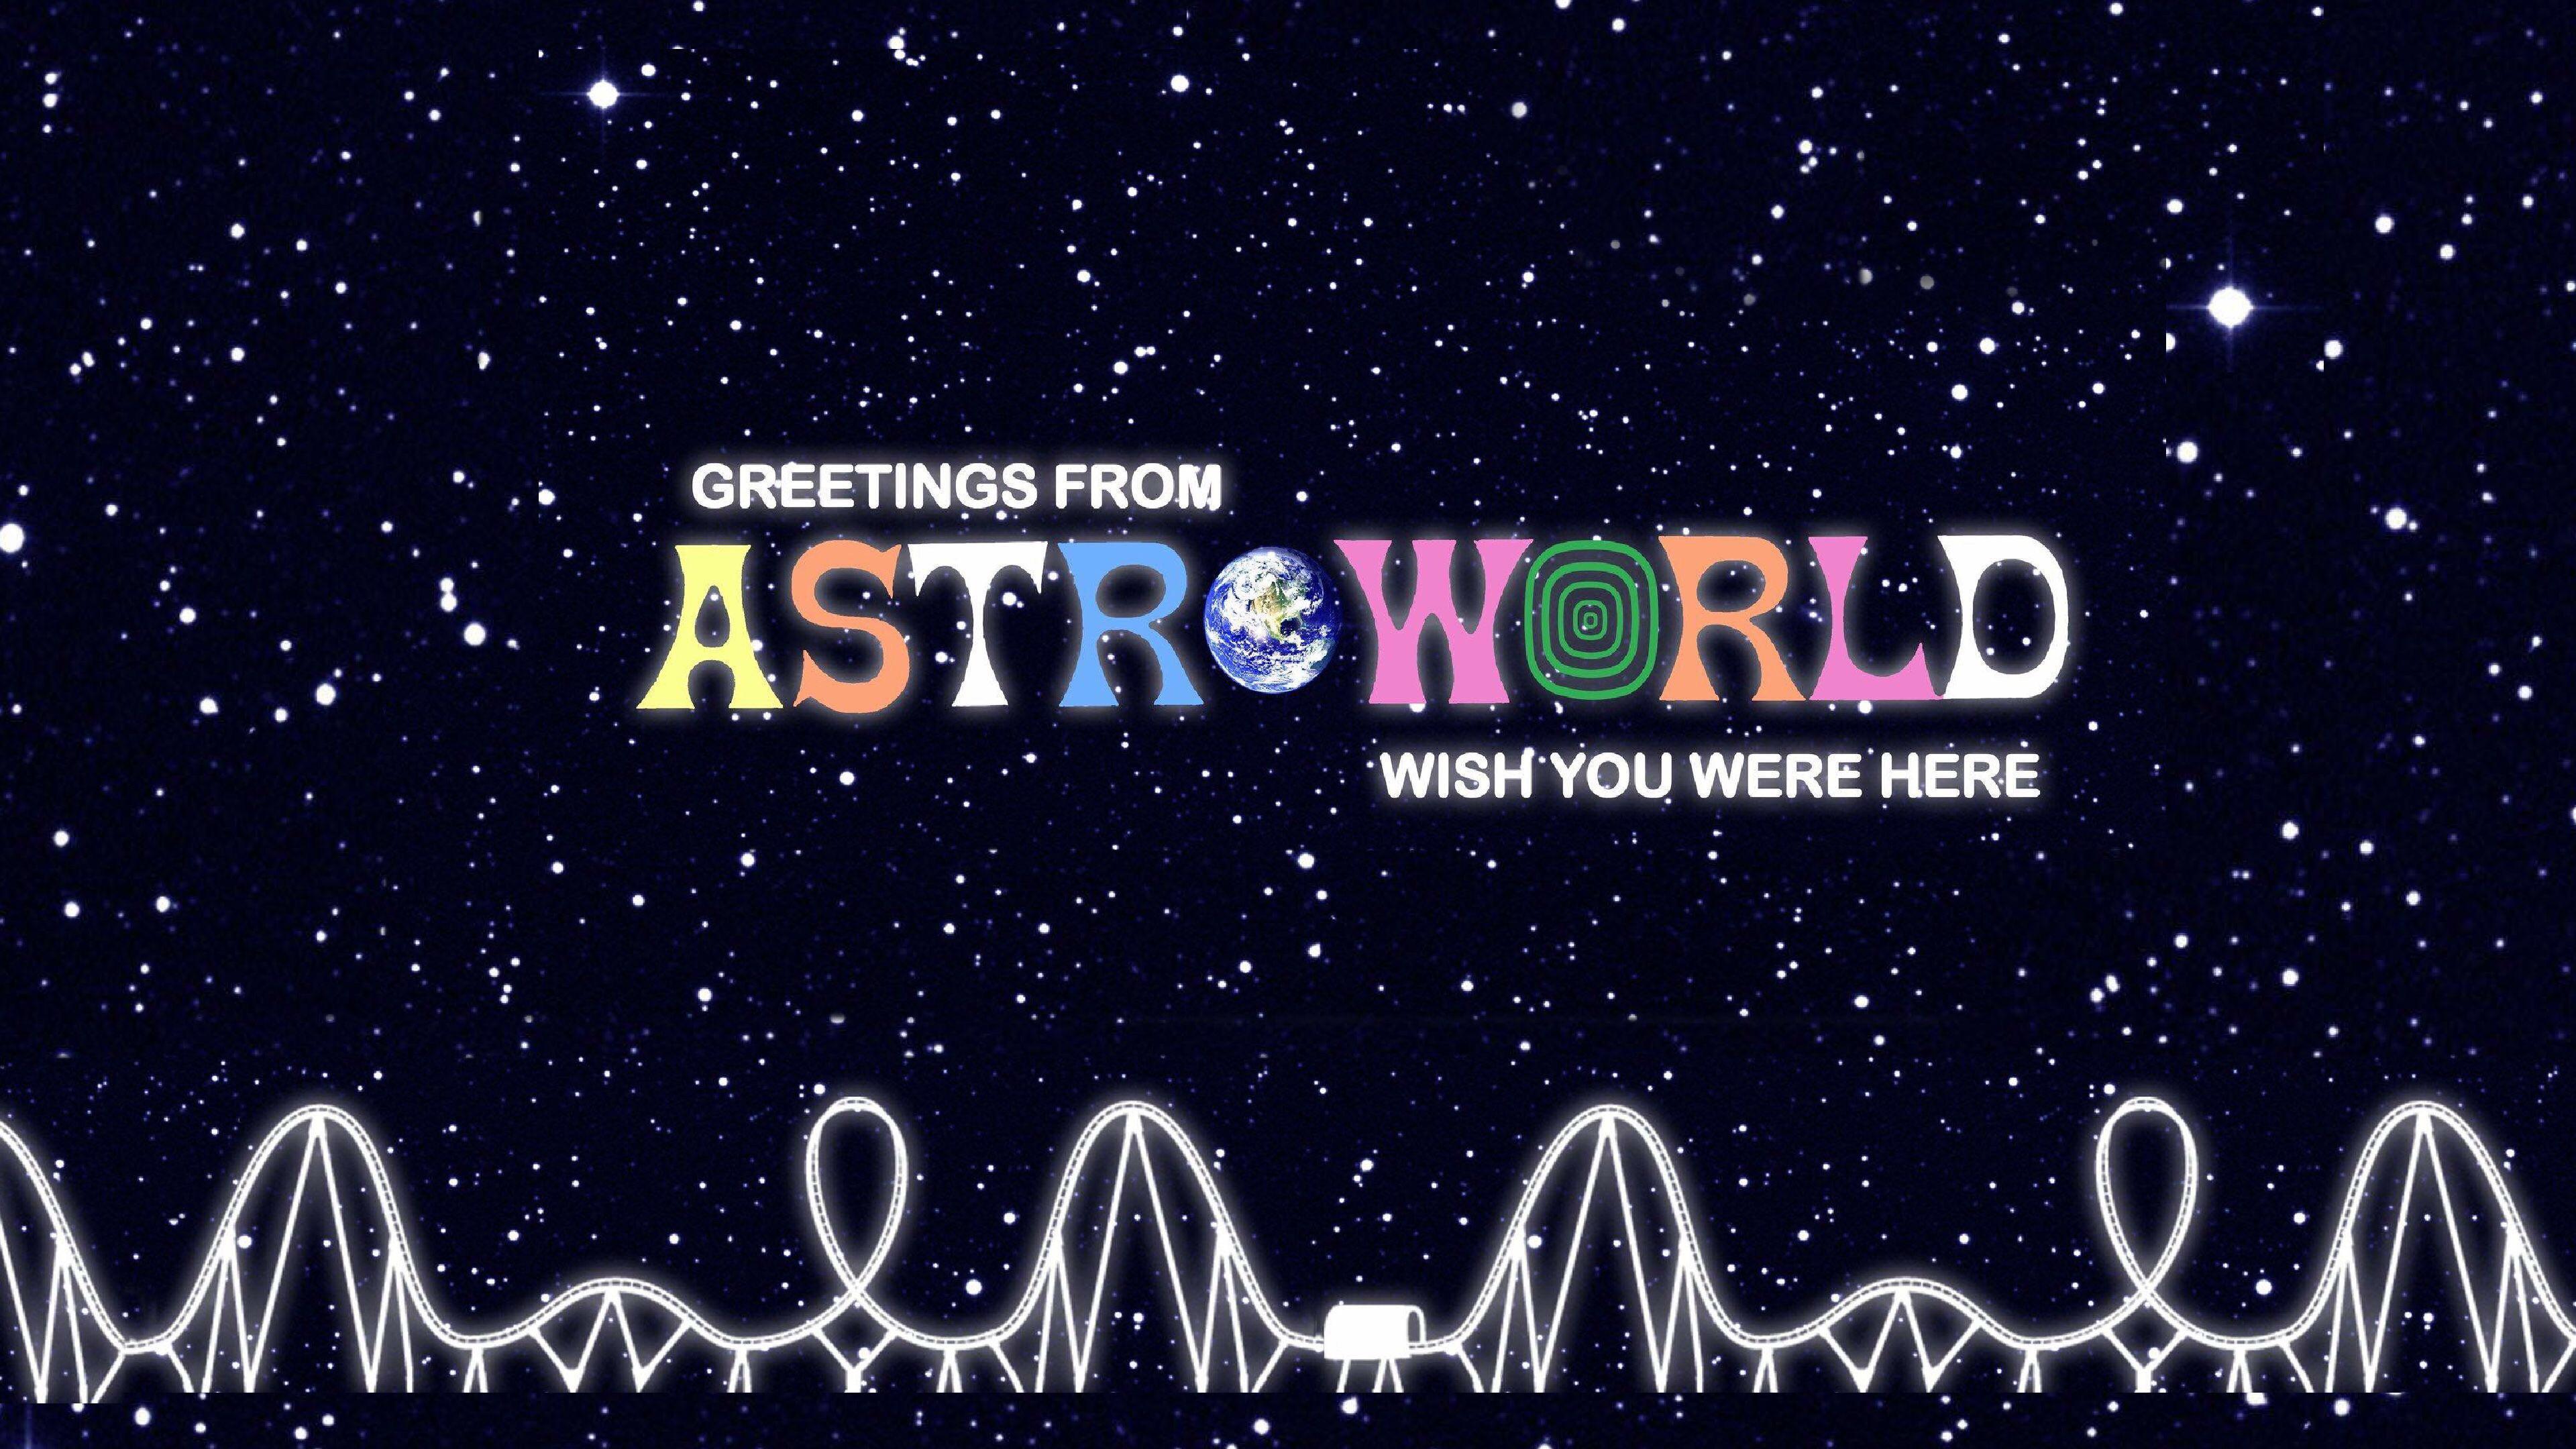 You are here world. Astroworld обои. Надпись астроворлд. Astroworld на рабочий стол. Astroworld обложка.